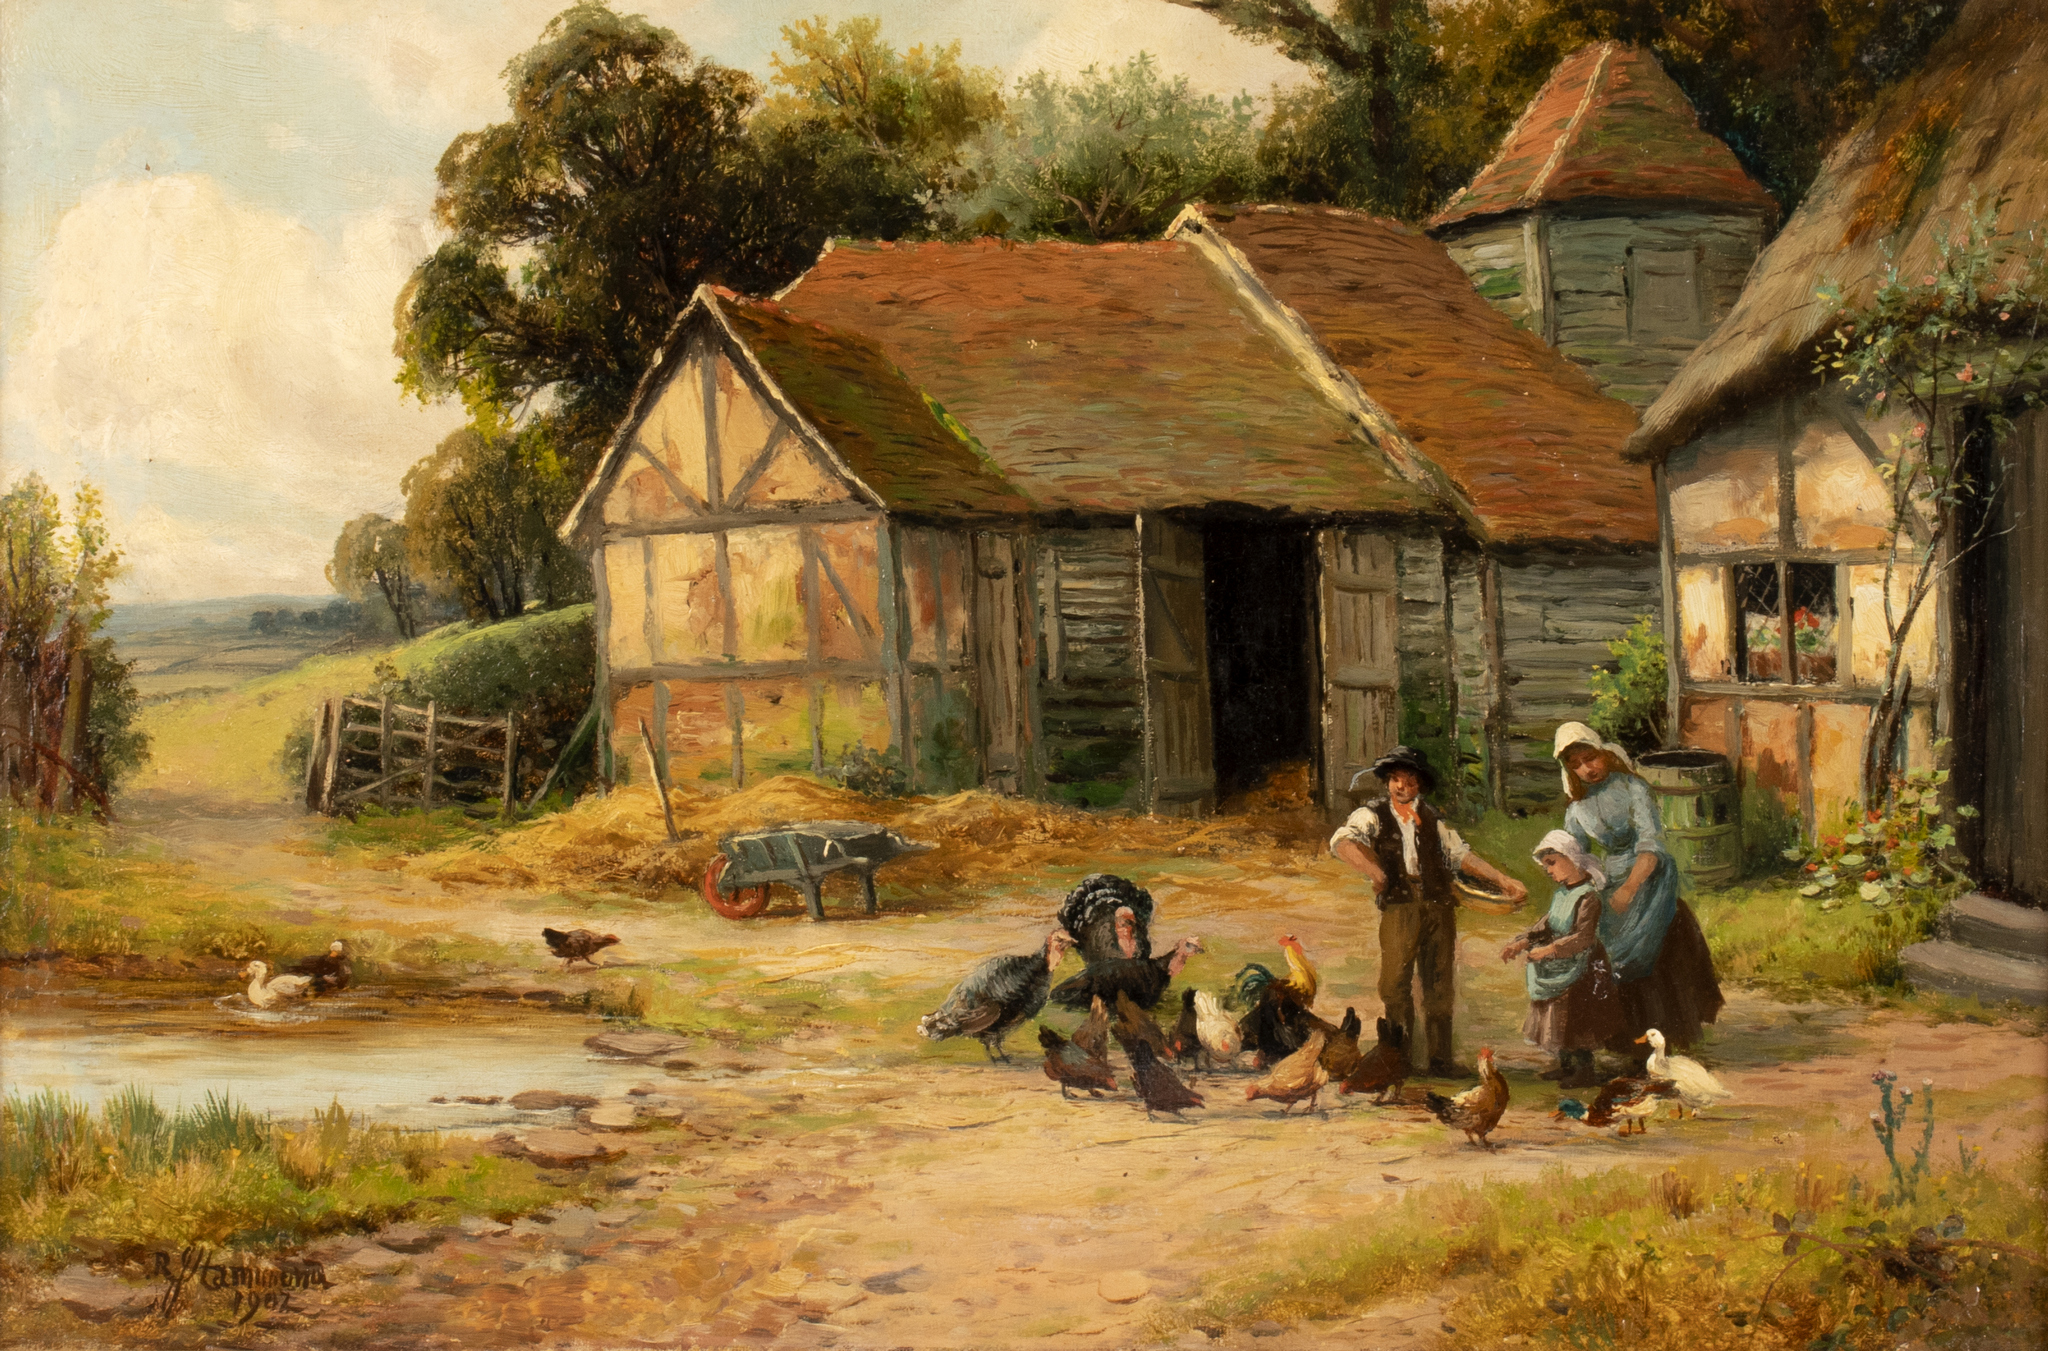 Robert John Hammond (1879-1911)/Farmyard Scene with Figures,